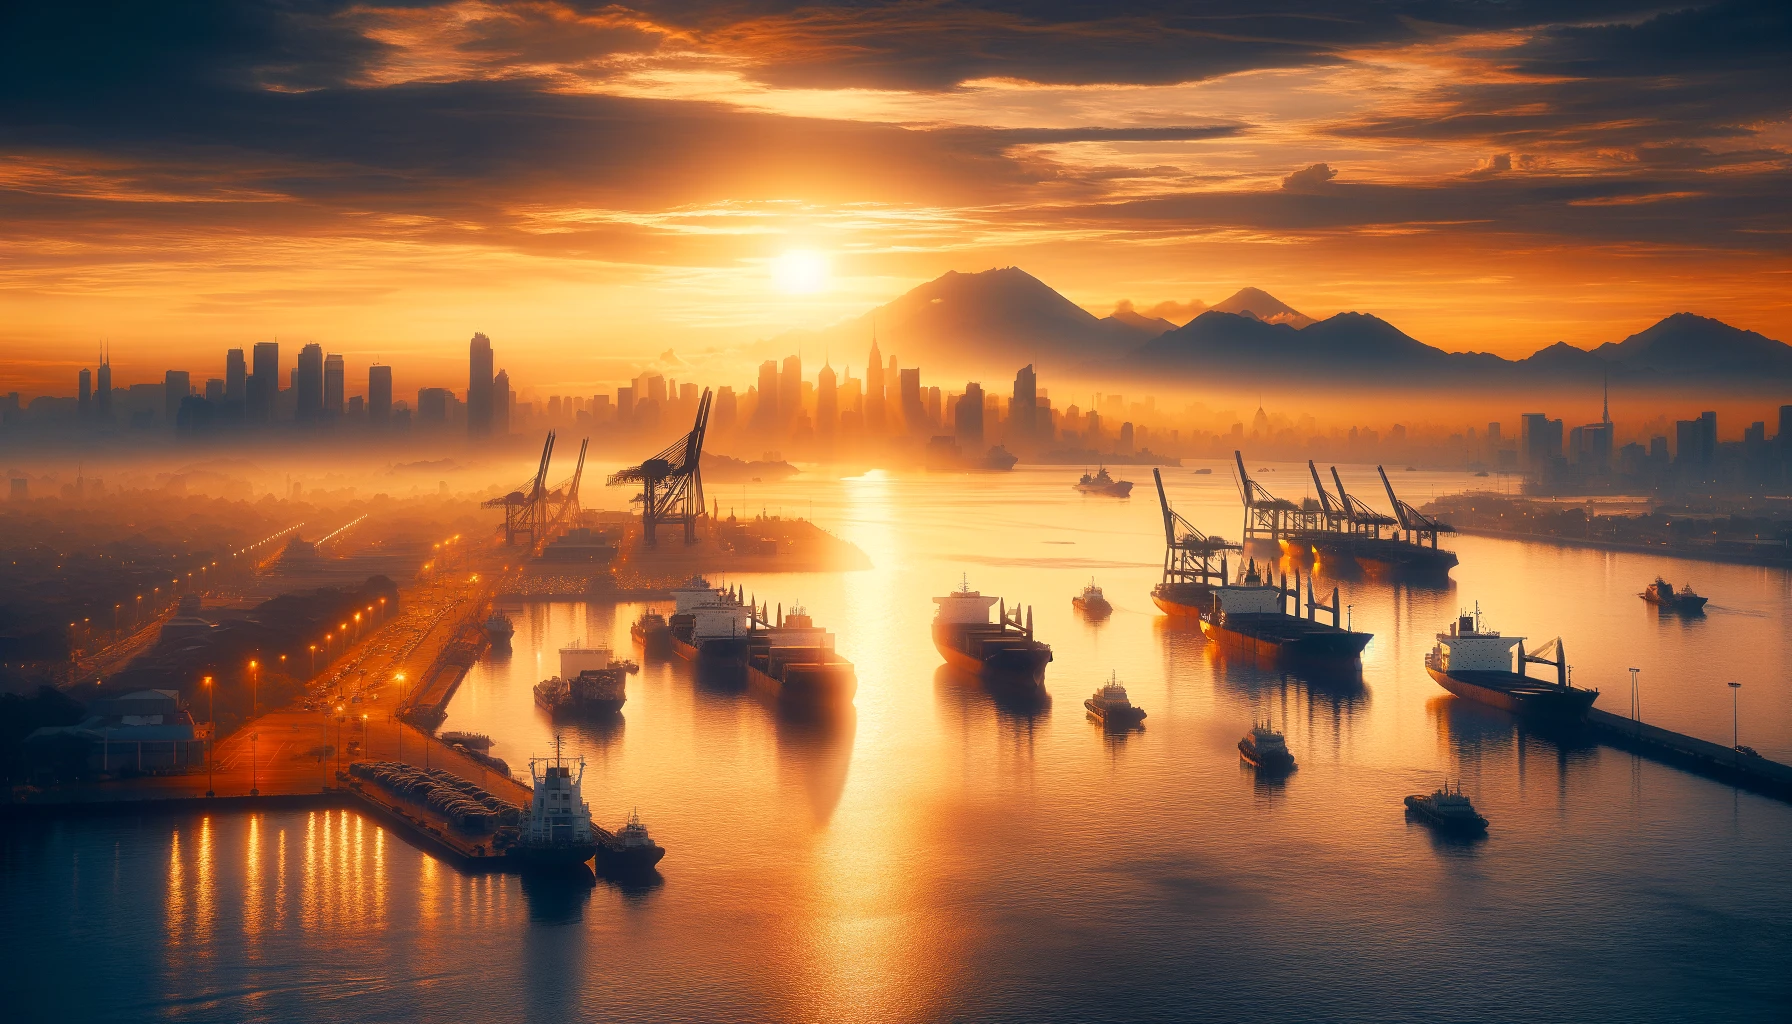 A beautiful image of a portuary city during sunrise